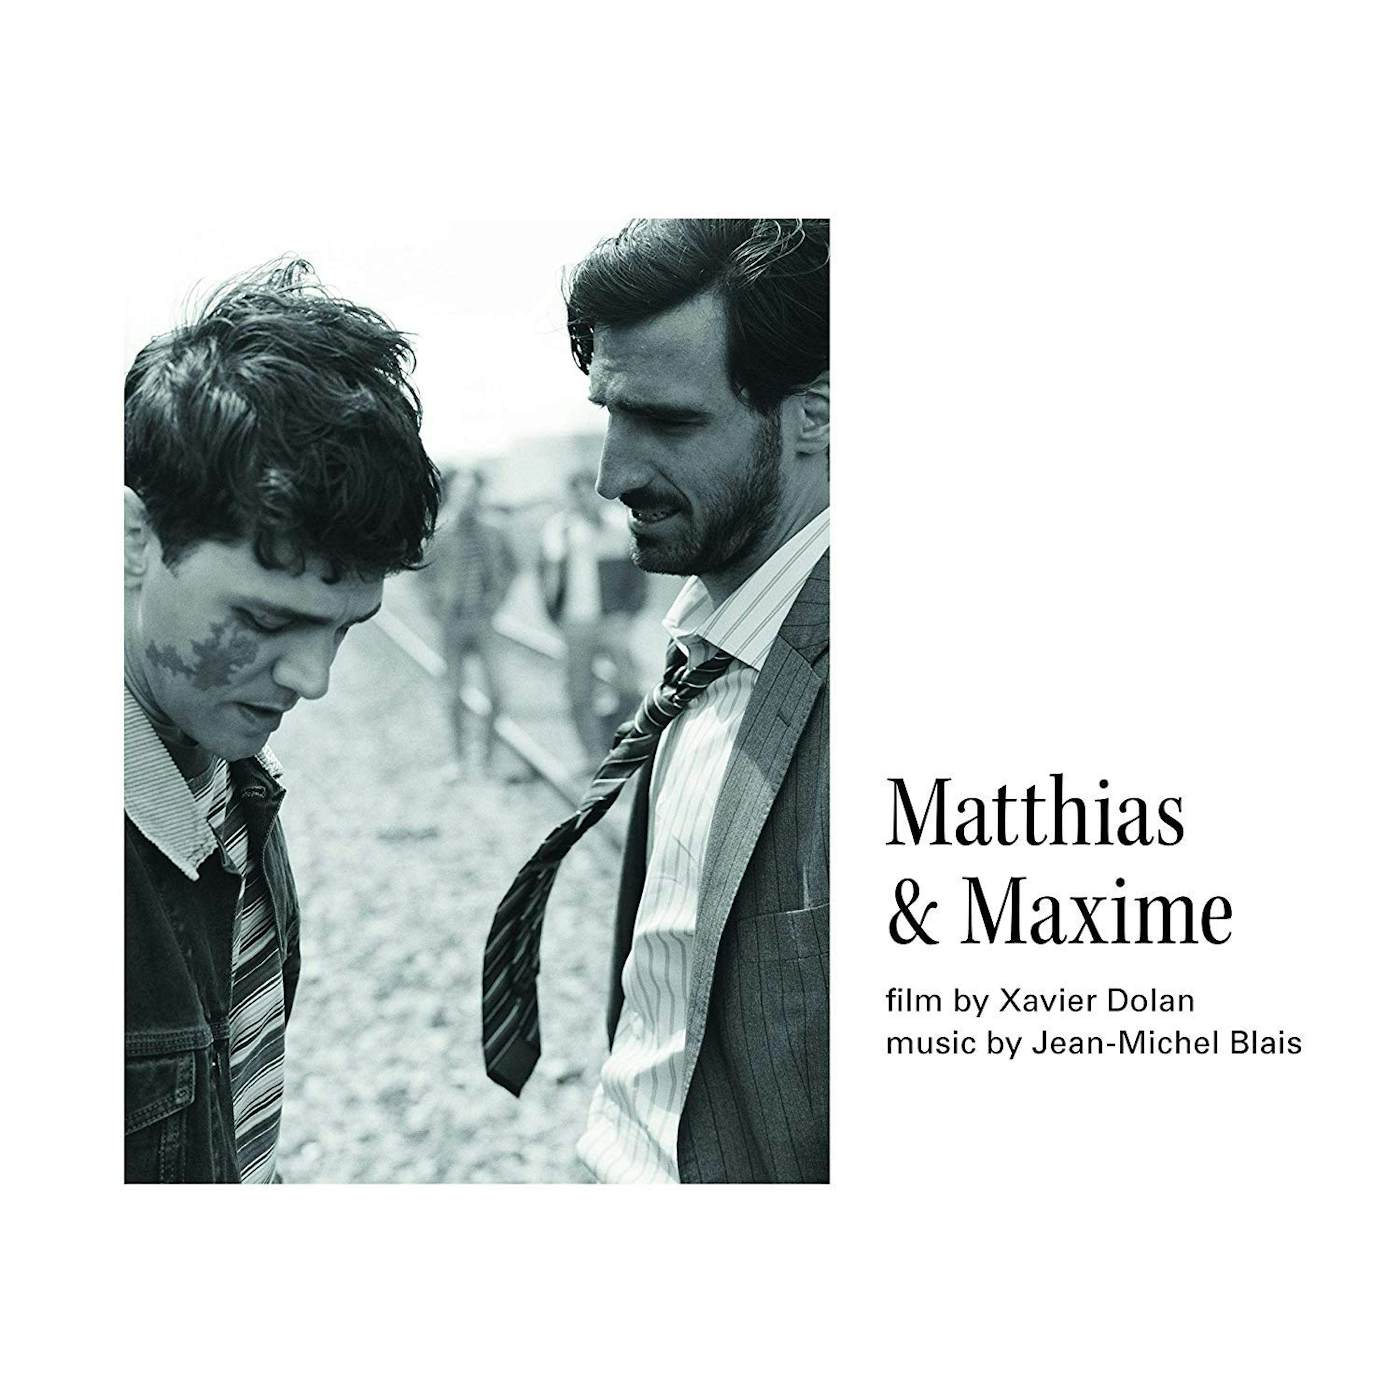 Jean-Michel Blais MATTHIAS & MAXIME / Original Soundtrack Vinyl Record